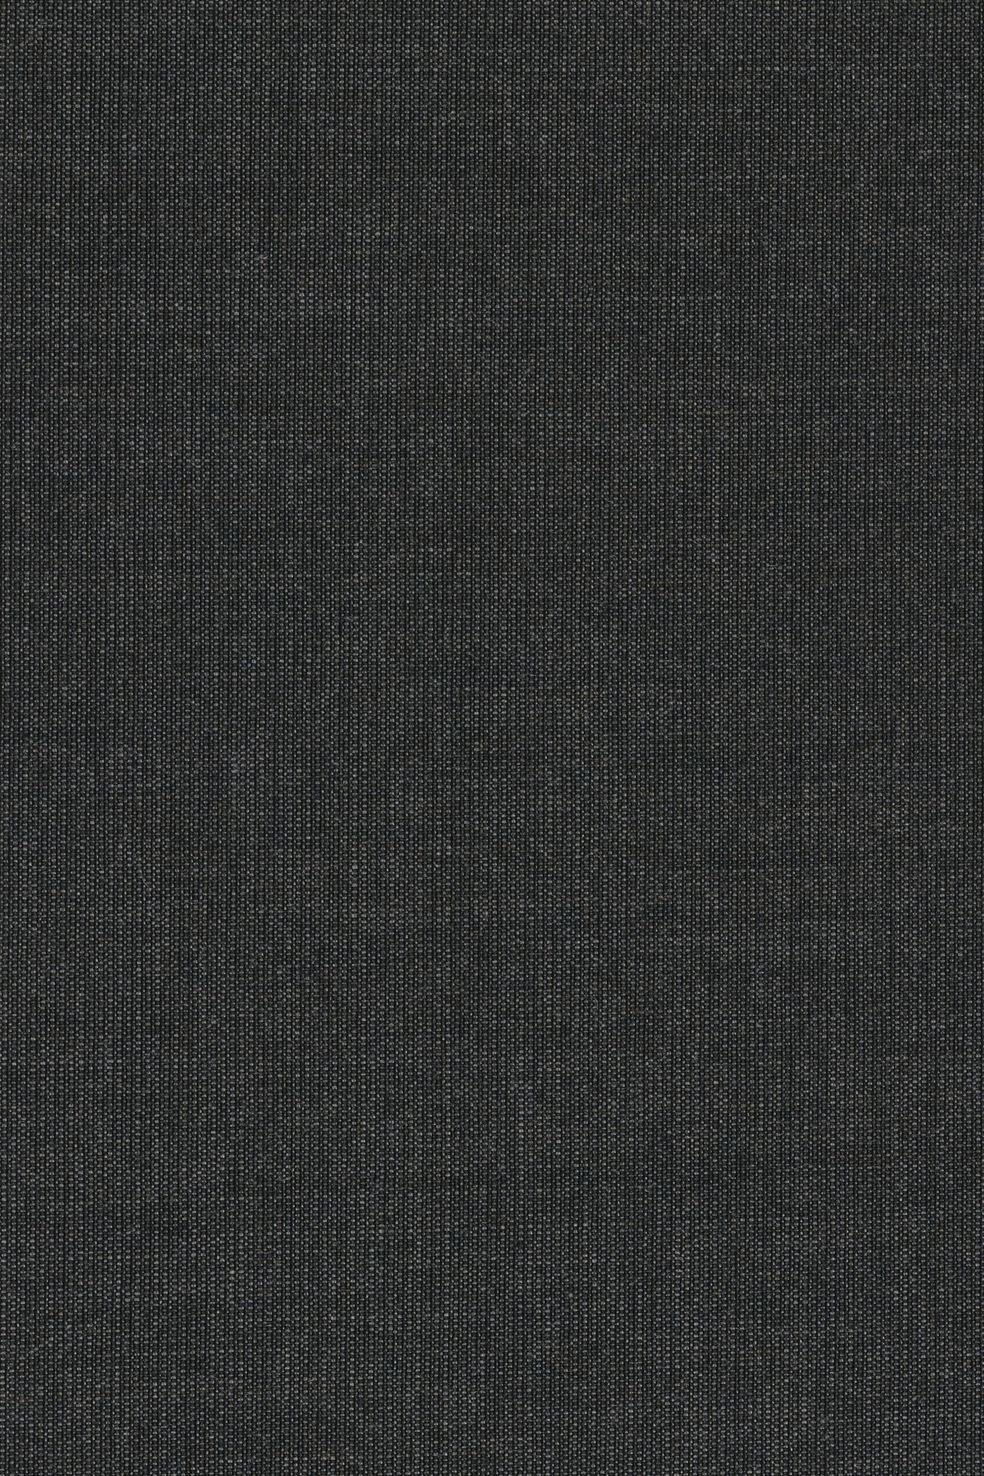 Fabric sample Canvas 2 174 grey